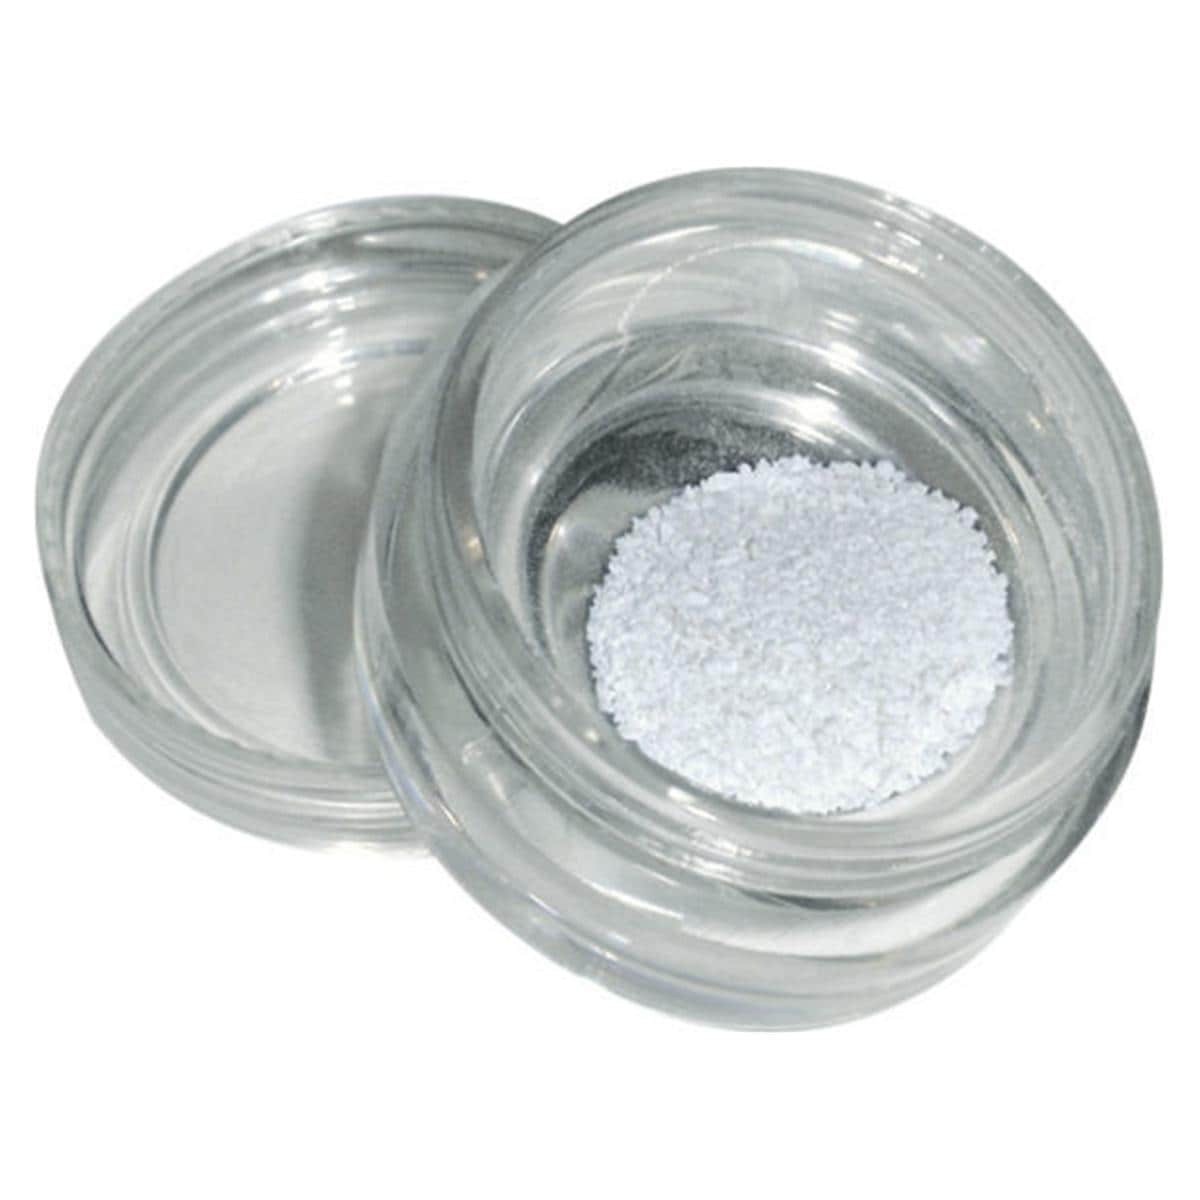 NuOss® Granulat - Spongiosagranulat (Cancellous), 1,0 - 2,0 mm, Packung 2,0 g